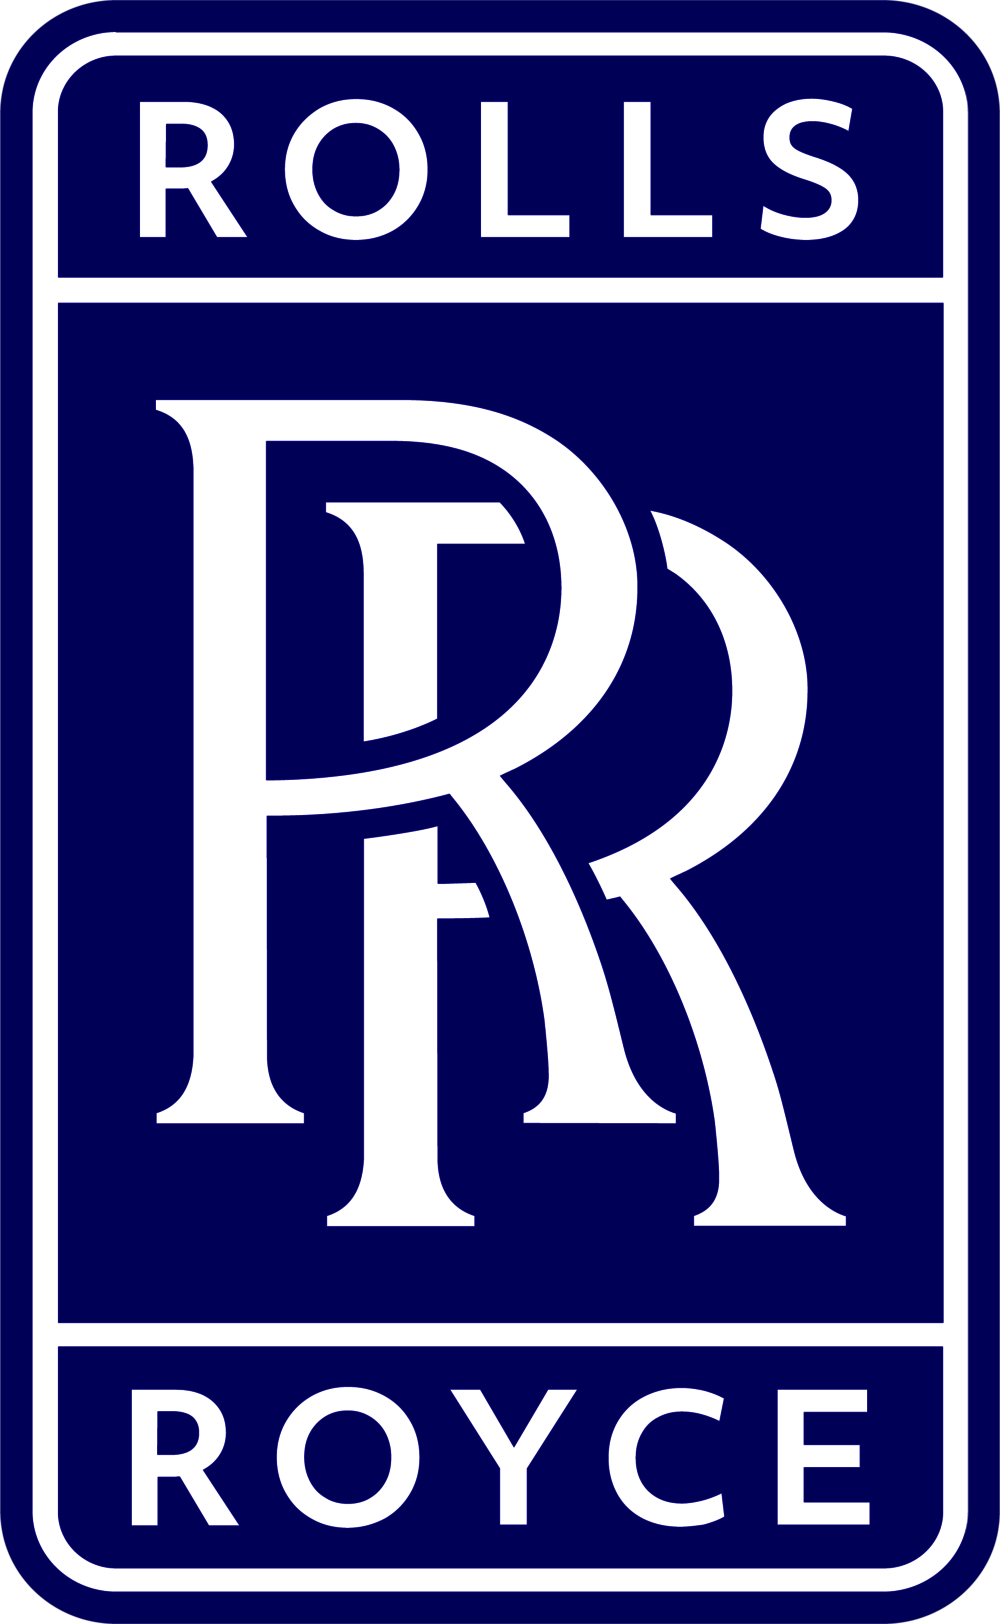 Rolls-Royce Solutions GmbH